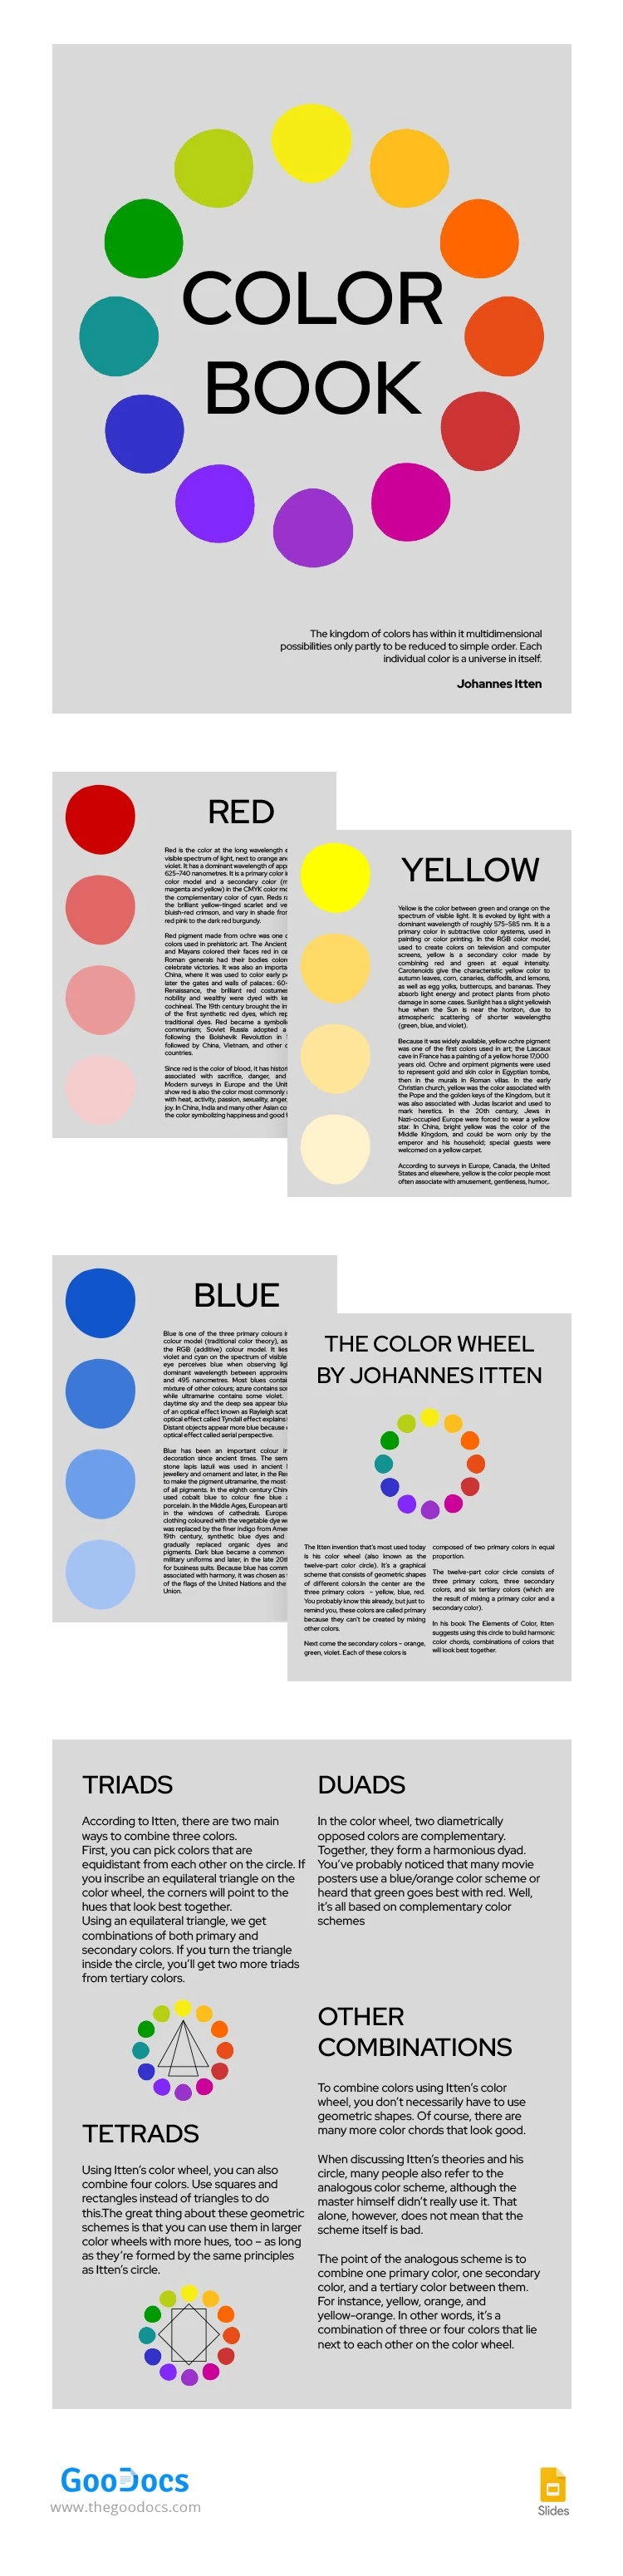 Grey Color Book - free Google Docs Template - 10063679